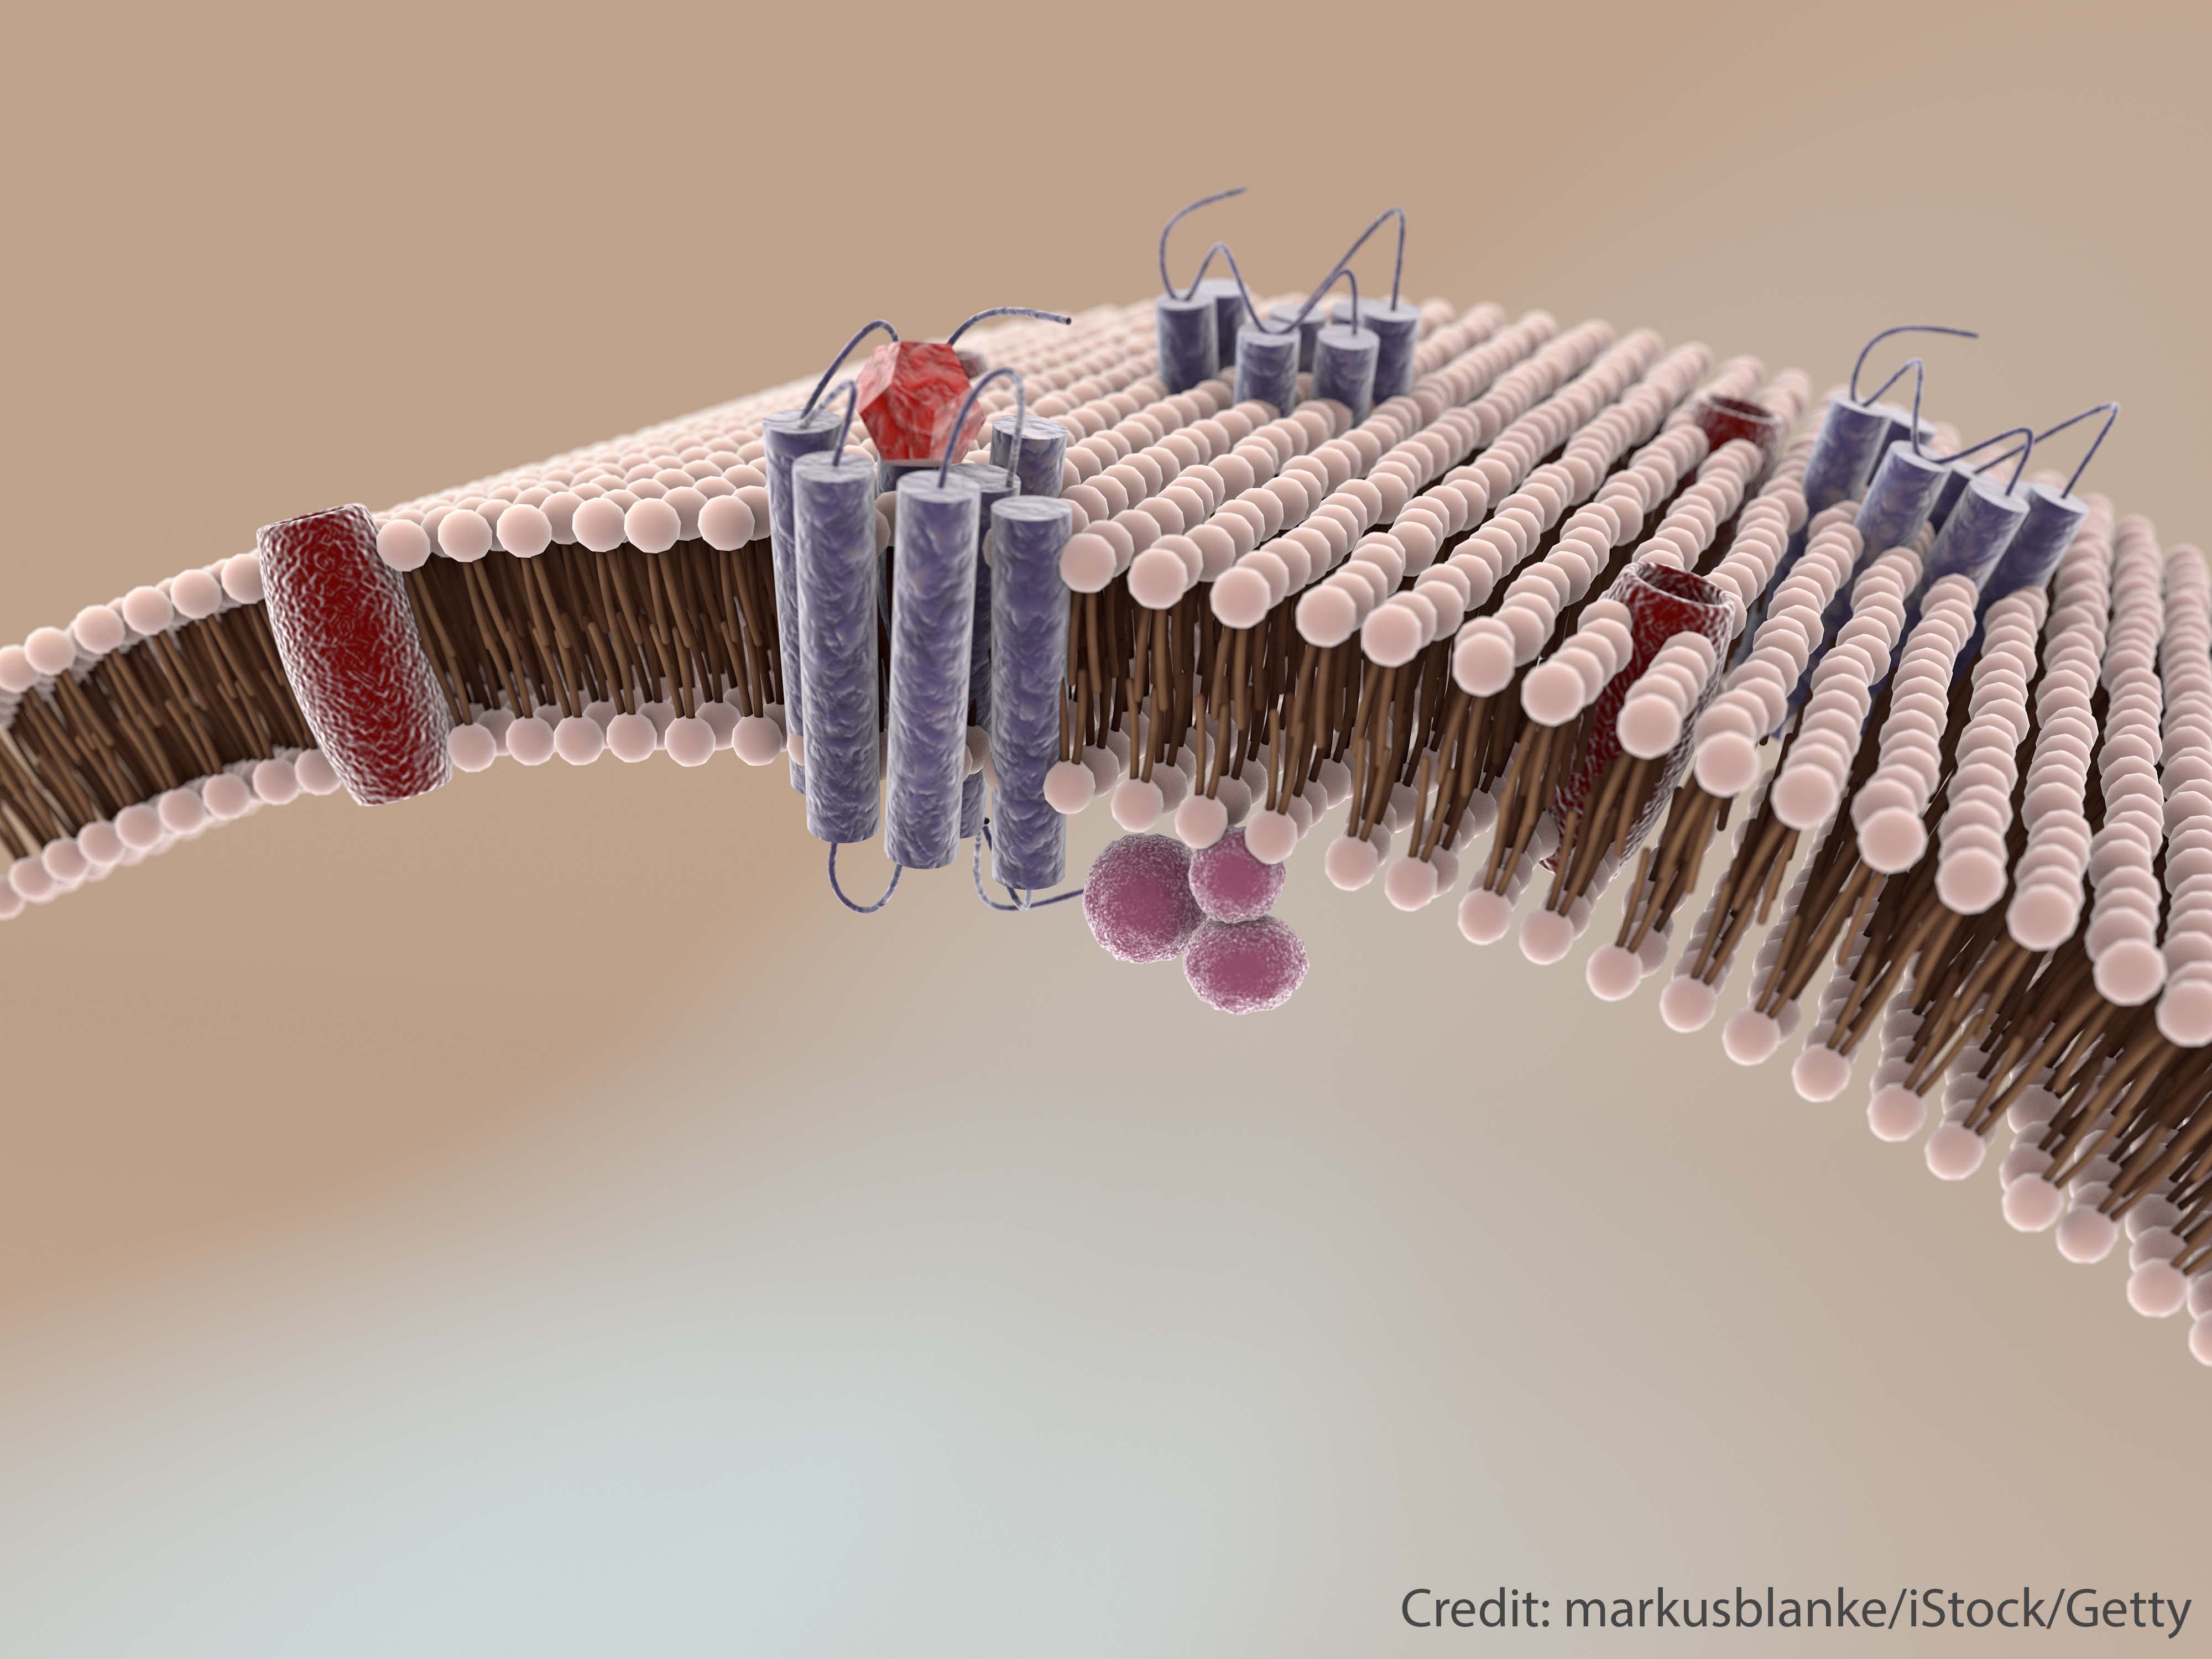 Building artificial cells